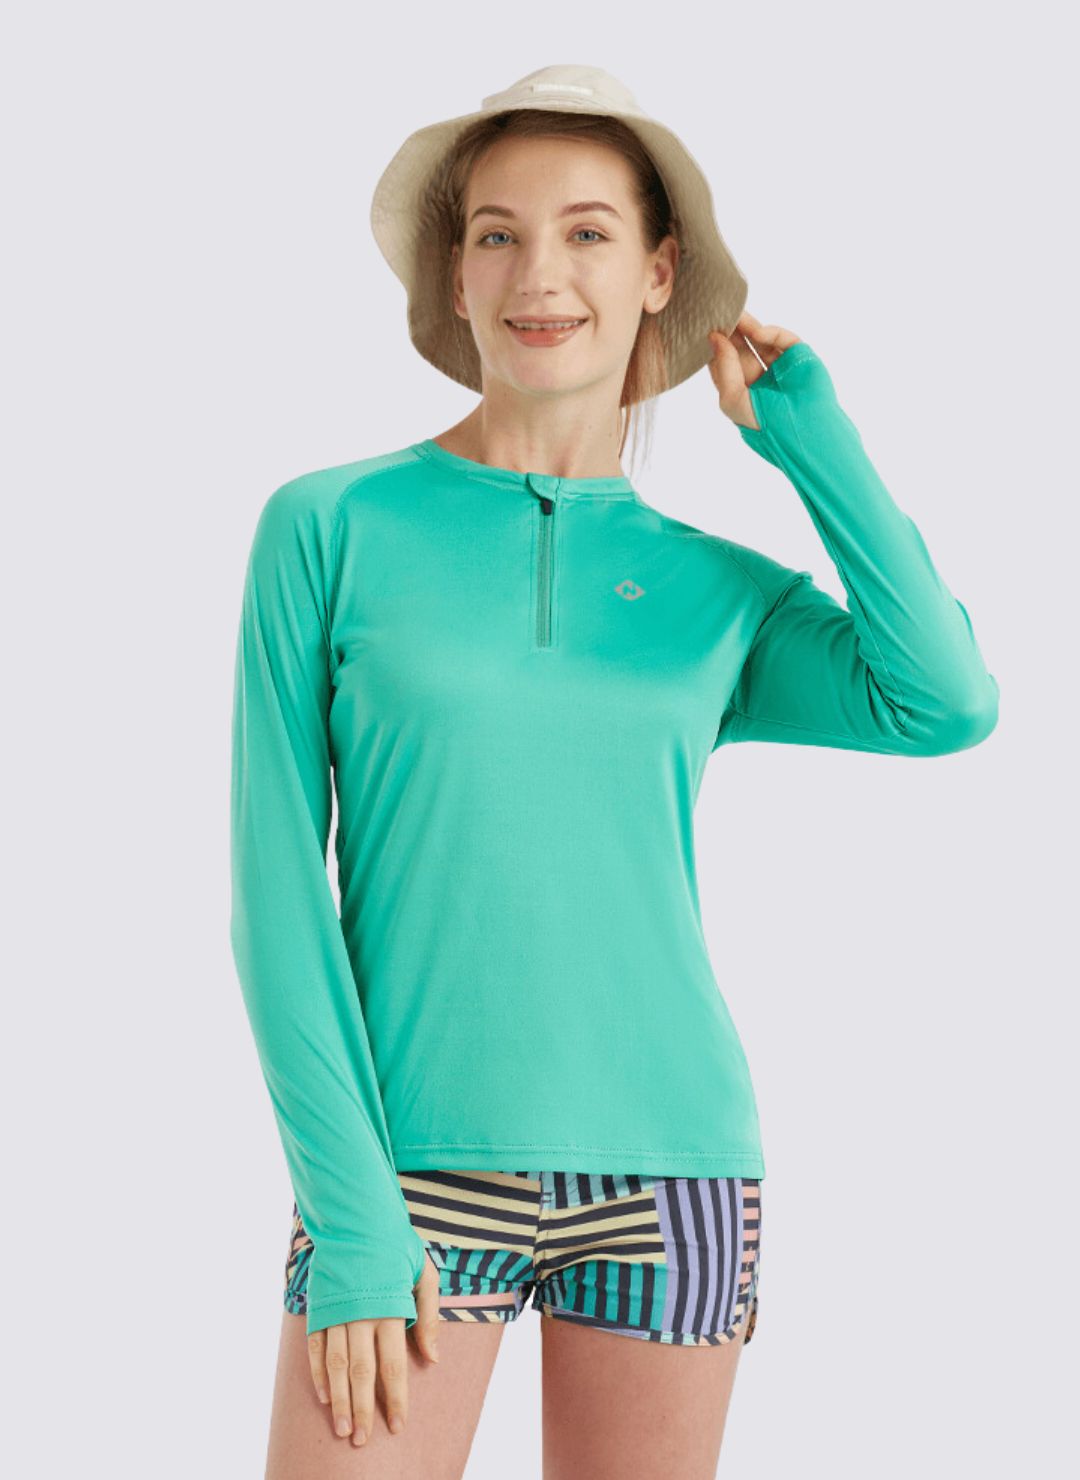 BALEAF Women's UPF 50+ Sun Protection T-Shirt Long Sleeve Half-Zip Thumb  Hole Outdoor Performance Blue Size XL